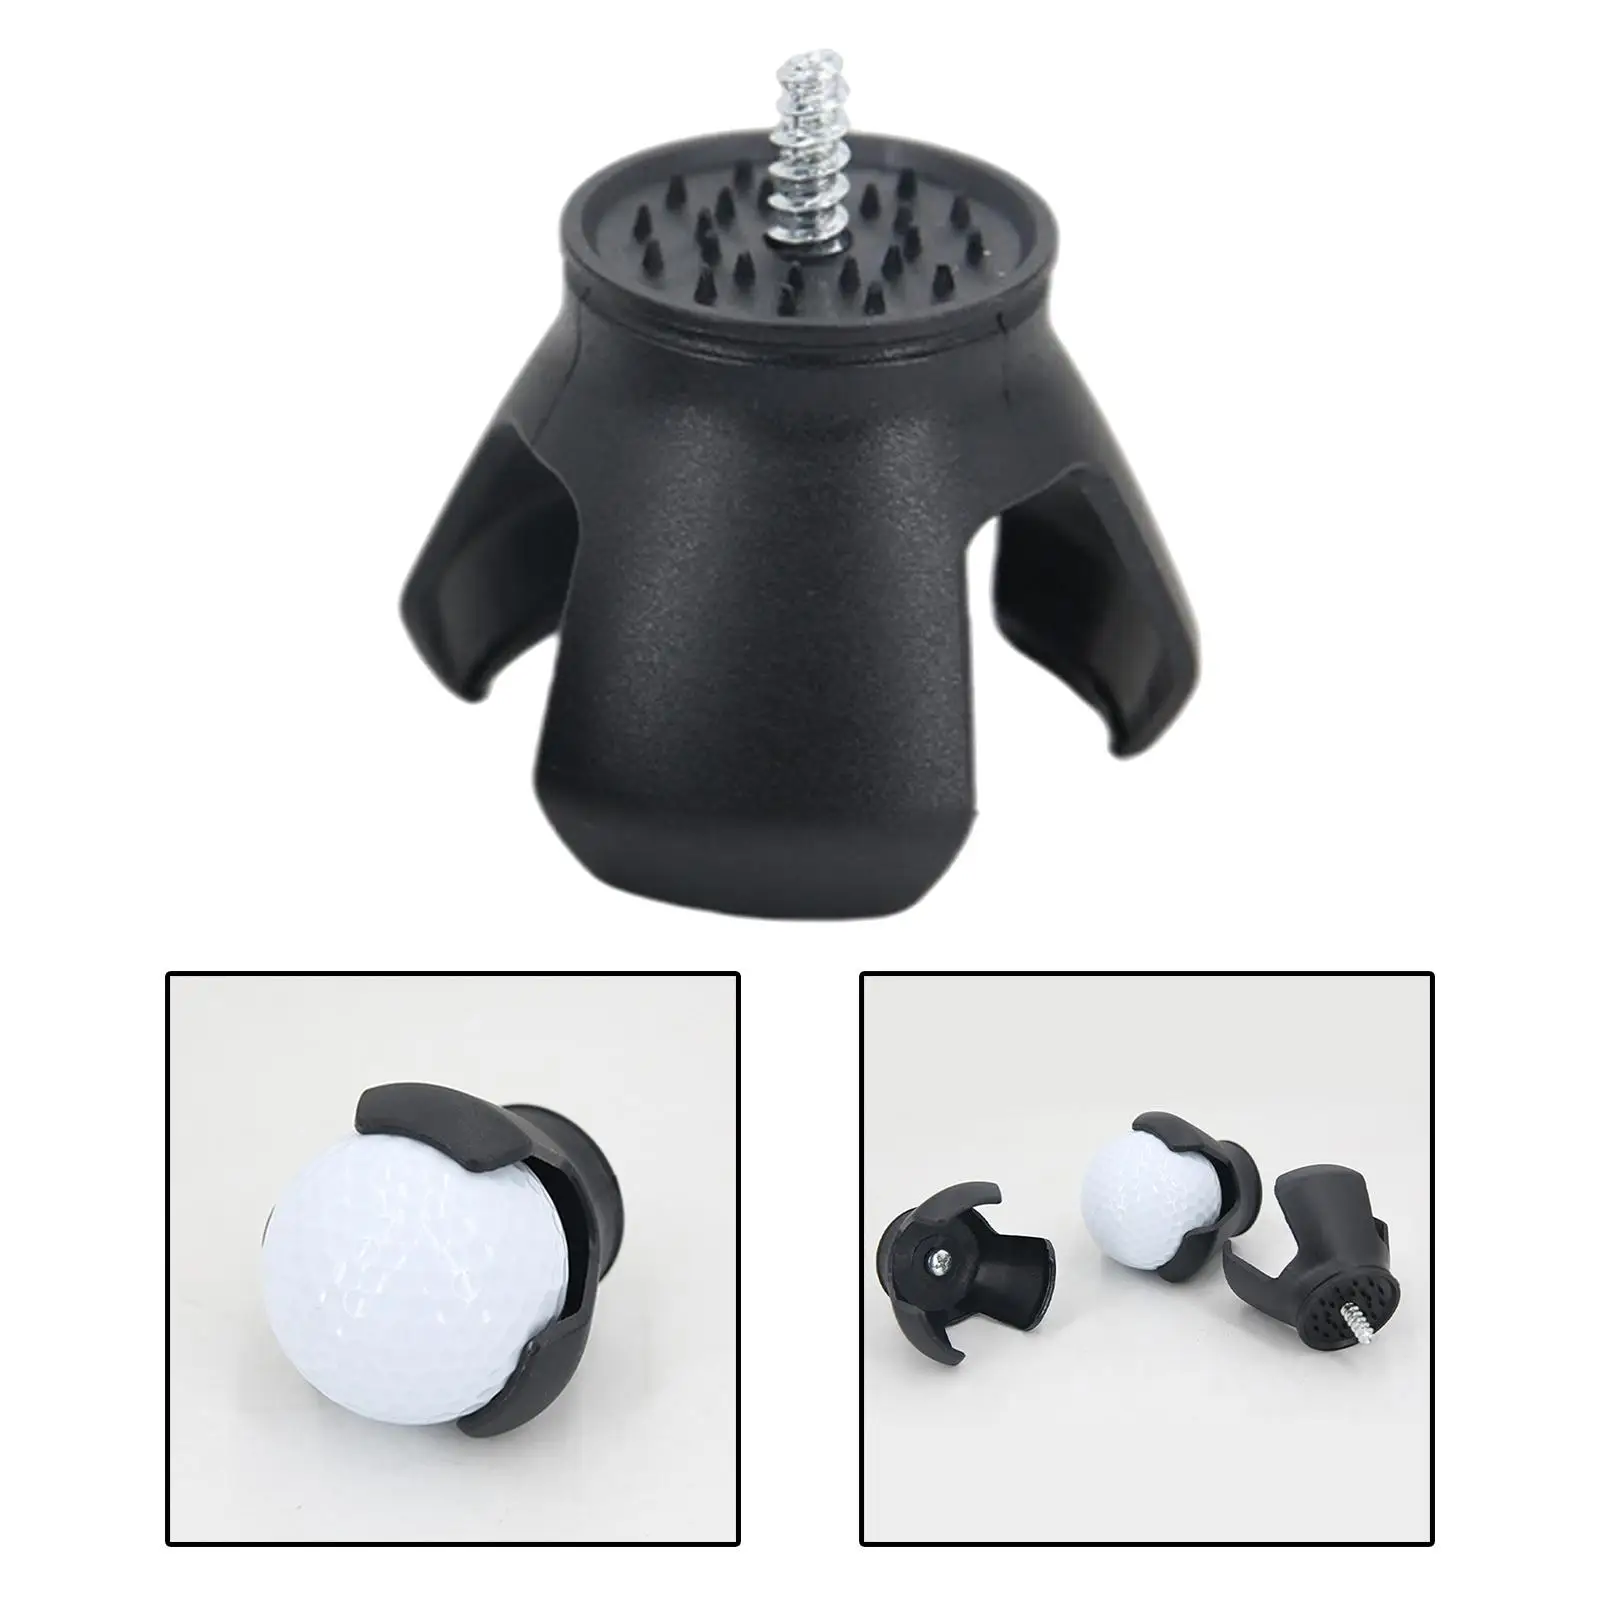 Golf Ball Retriever Grabber 3 Claw Screw in Durable Training Picker Golf Ball Pick up Putter Grip Golfer Accessories